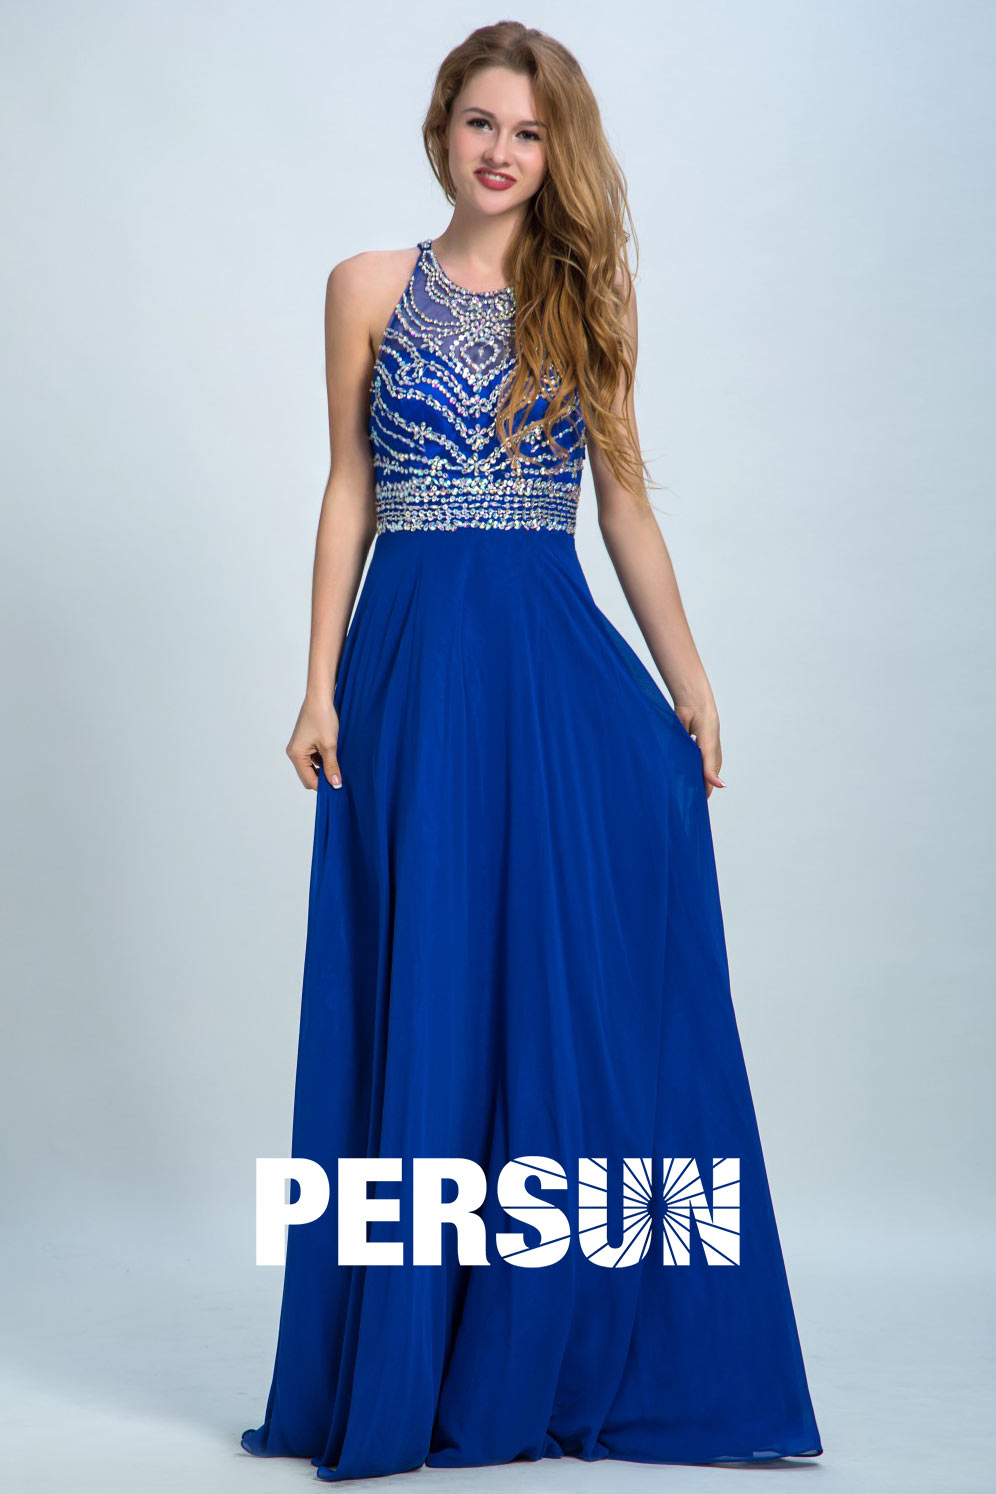 Persun Elegant Backless Crystal Details Long Prom Dress